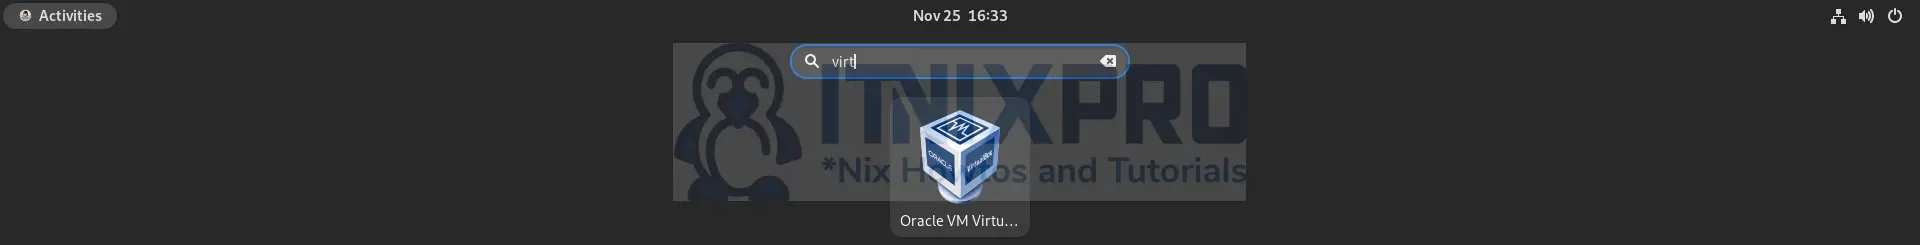 Install VirtualBox 7 on Oracle Linux